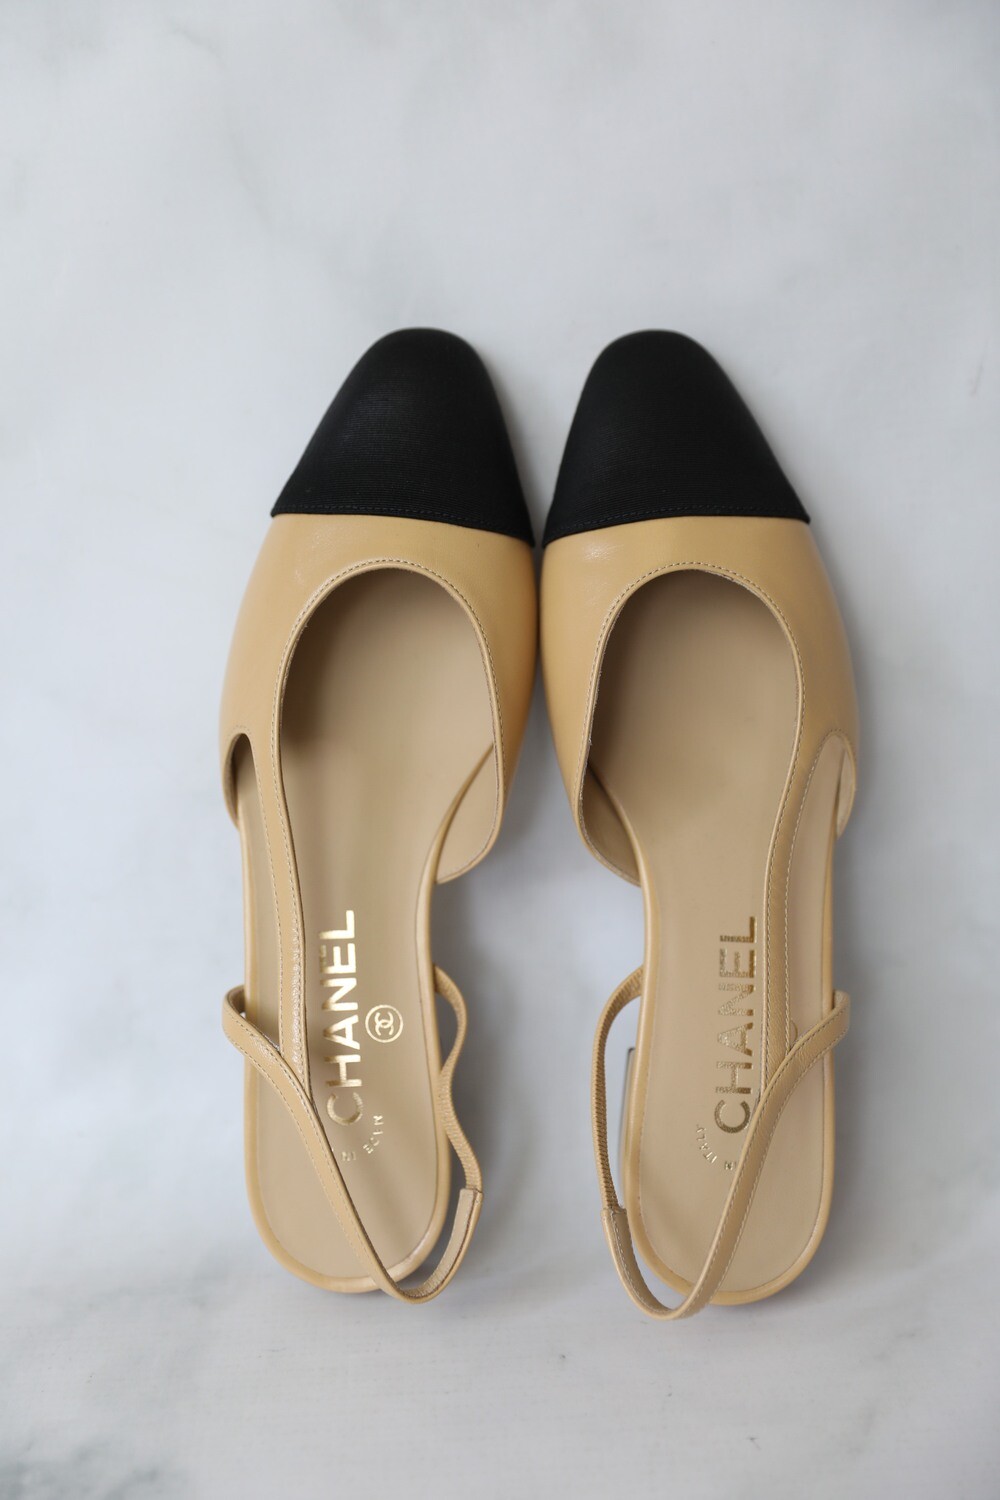 Chanel Shoes Slingback Flats, Beige and Black, Size 38.5, New in Box WA001  - Julia Rose Boston